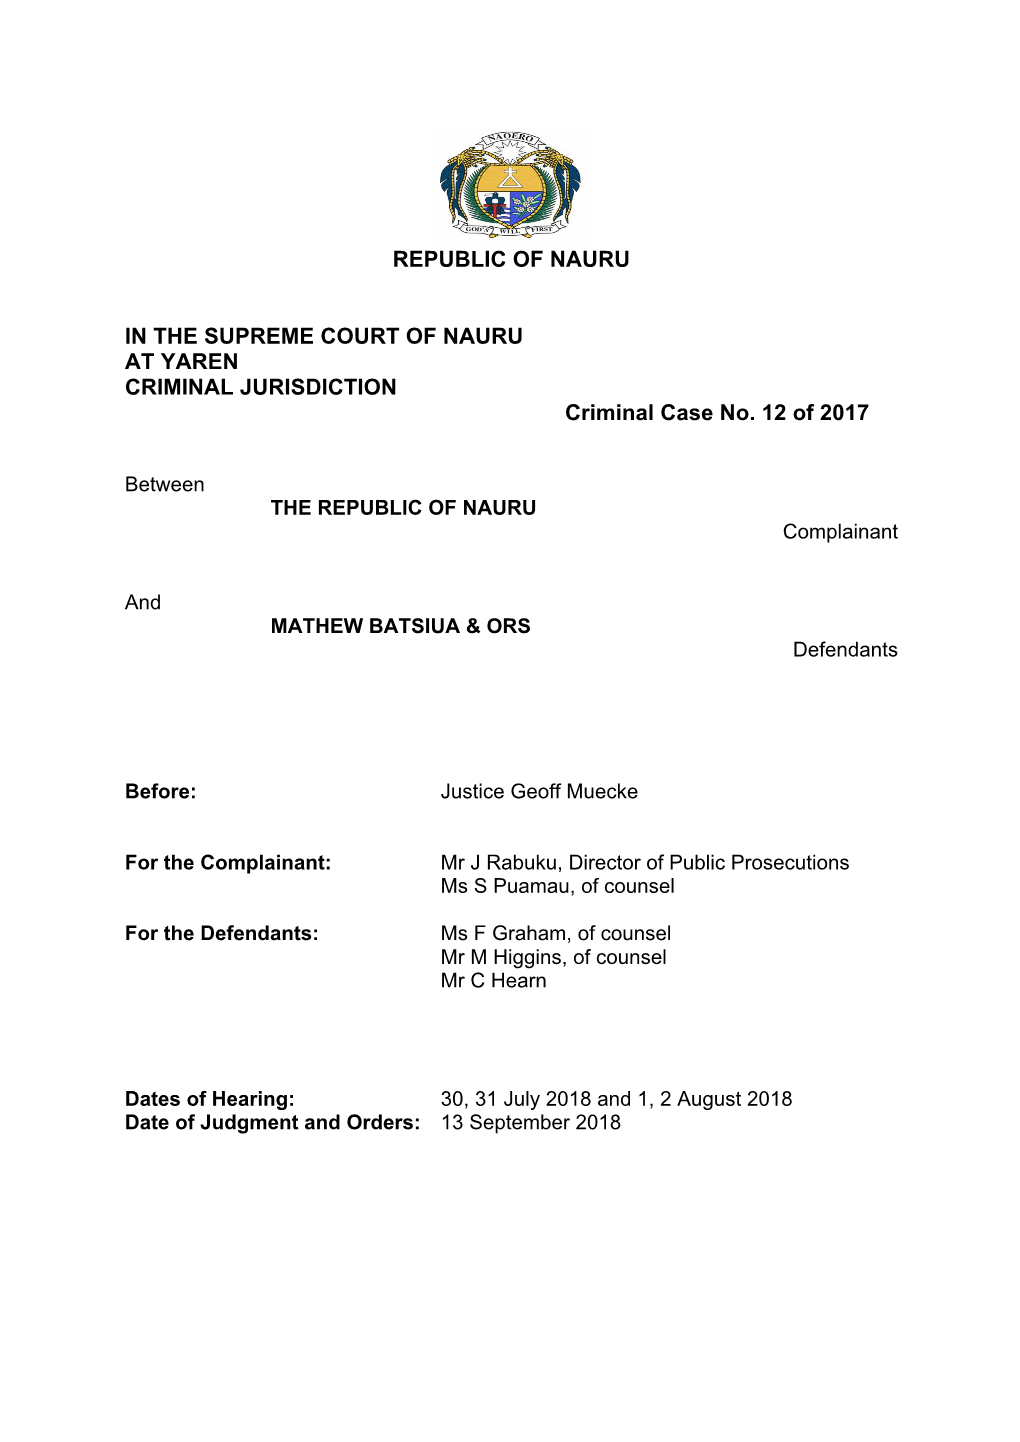 REPUBLIC of NAURU in the SUPREME COURT of NAURU at YAREN CRIMINAL JURISDICTION Criminal Case No. 12 of 2017